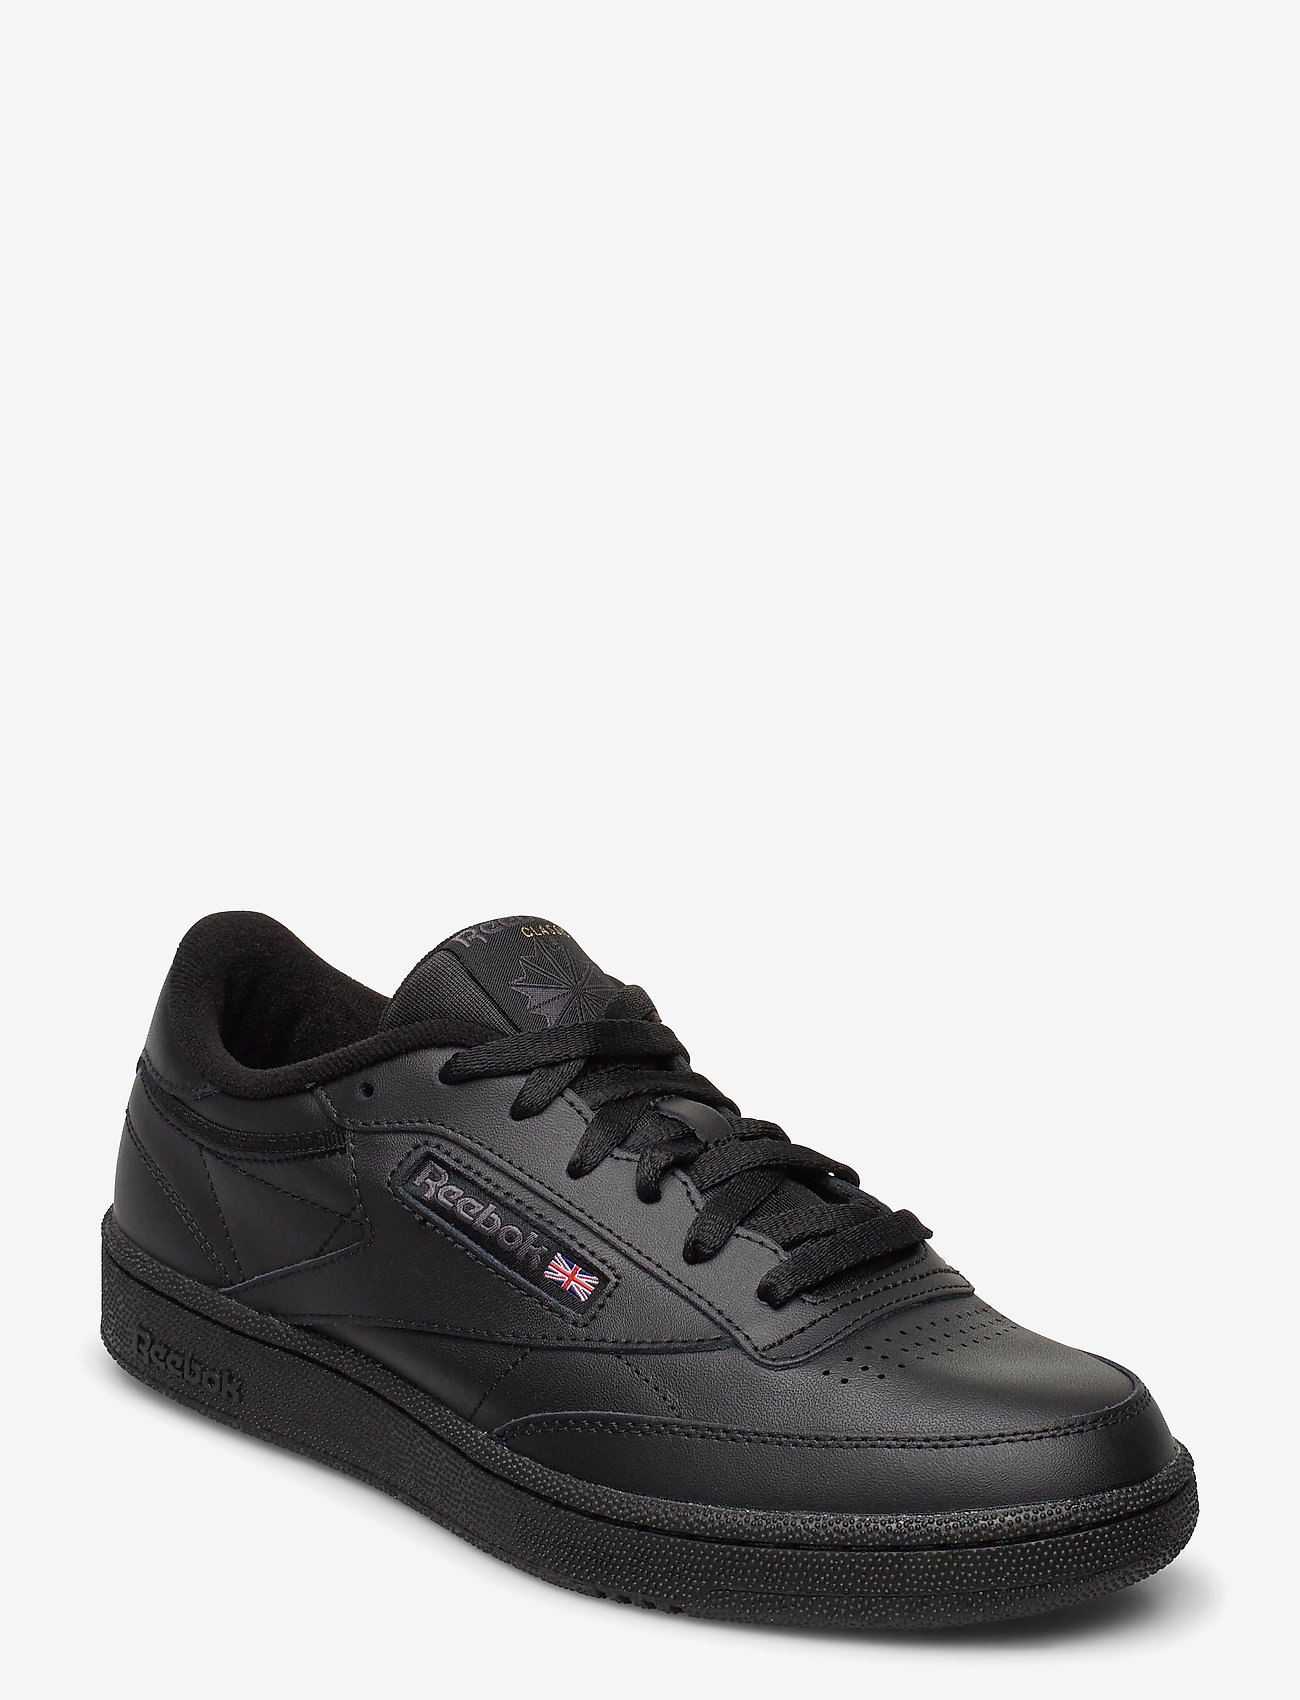 Reebok Classics - CLUB C 85 - niedrige sneakers - black/charcoal - 0